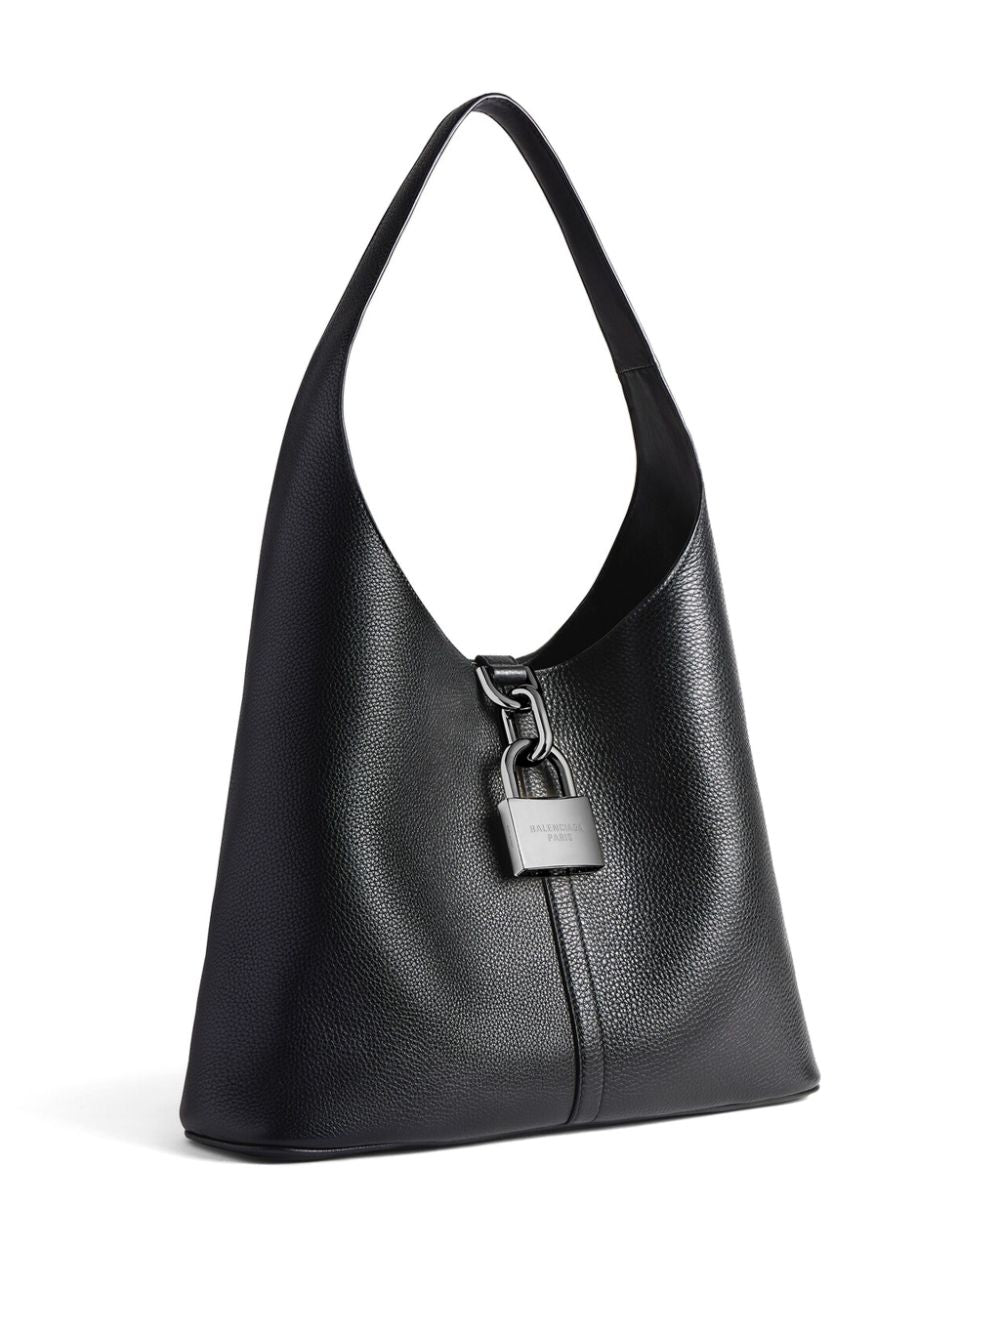 Black Grained Leather Tote Handbag for Women